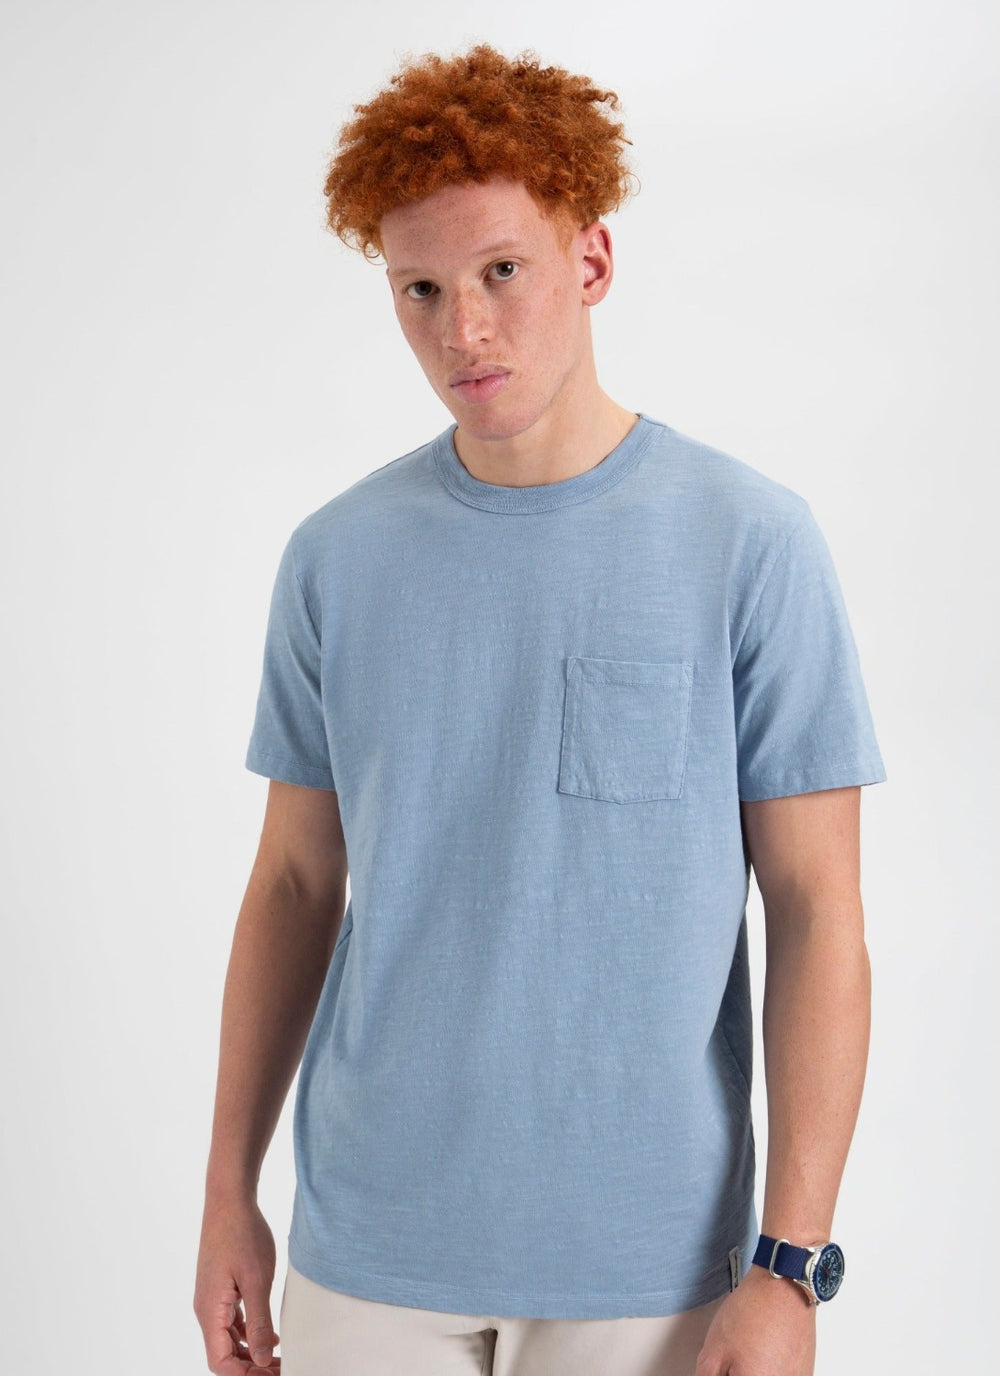 Garment Dye Beatnik Short-Sleeve T-Shirt - Pale Blue